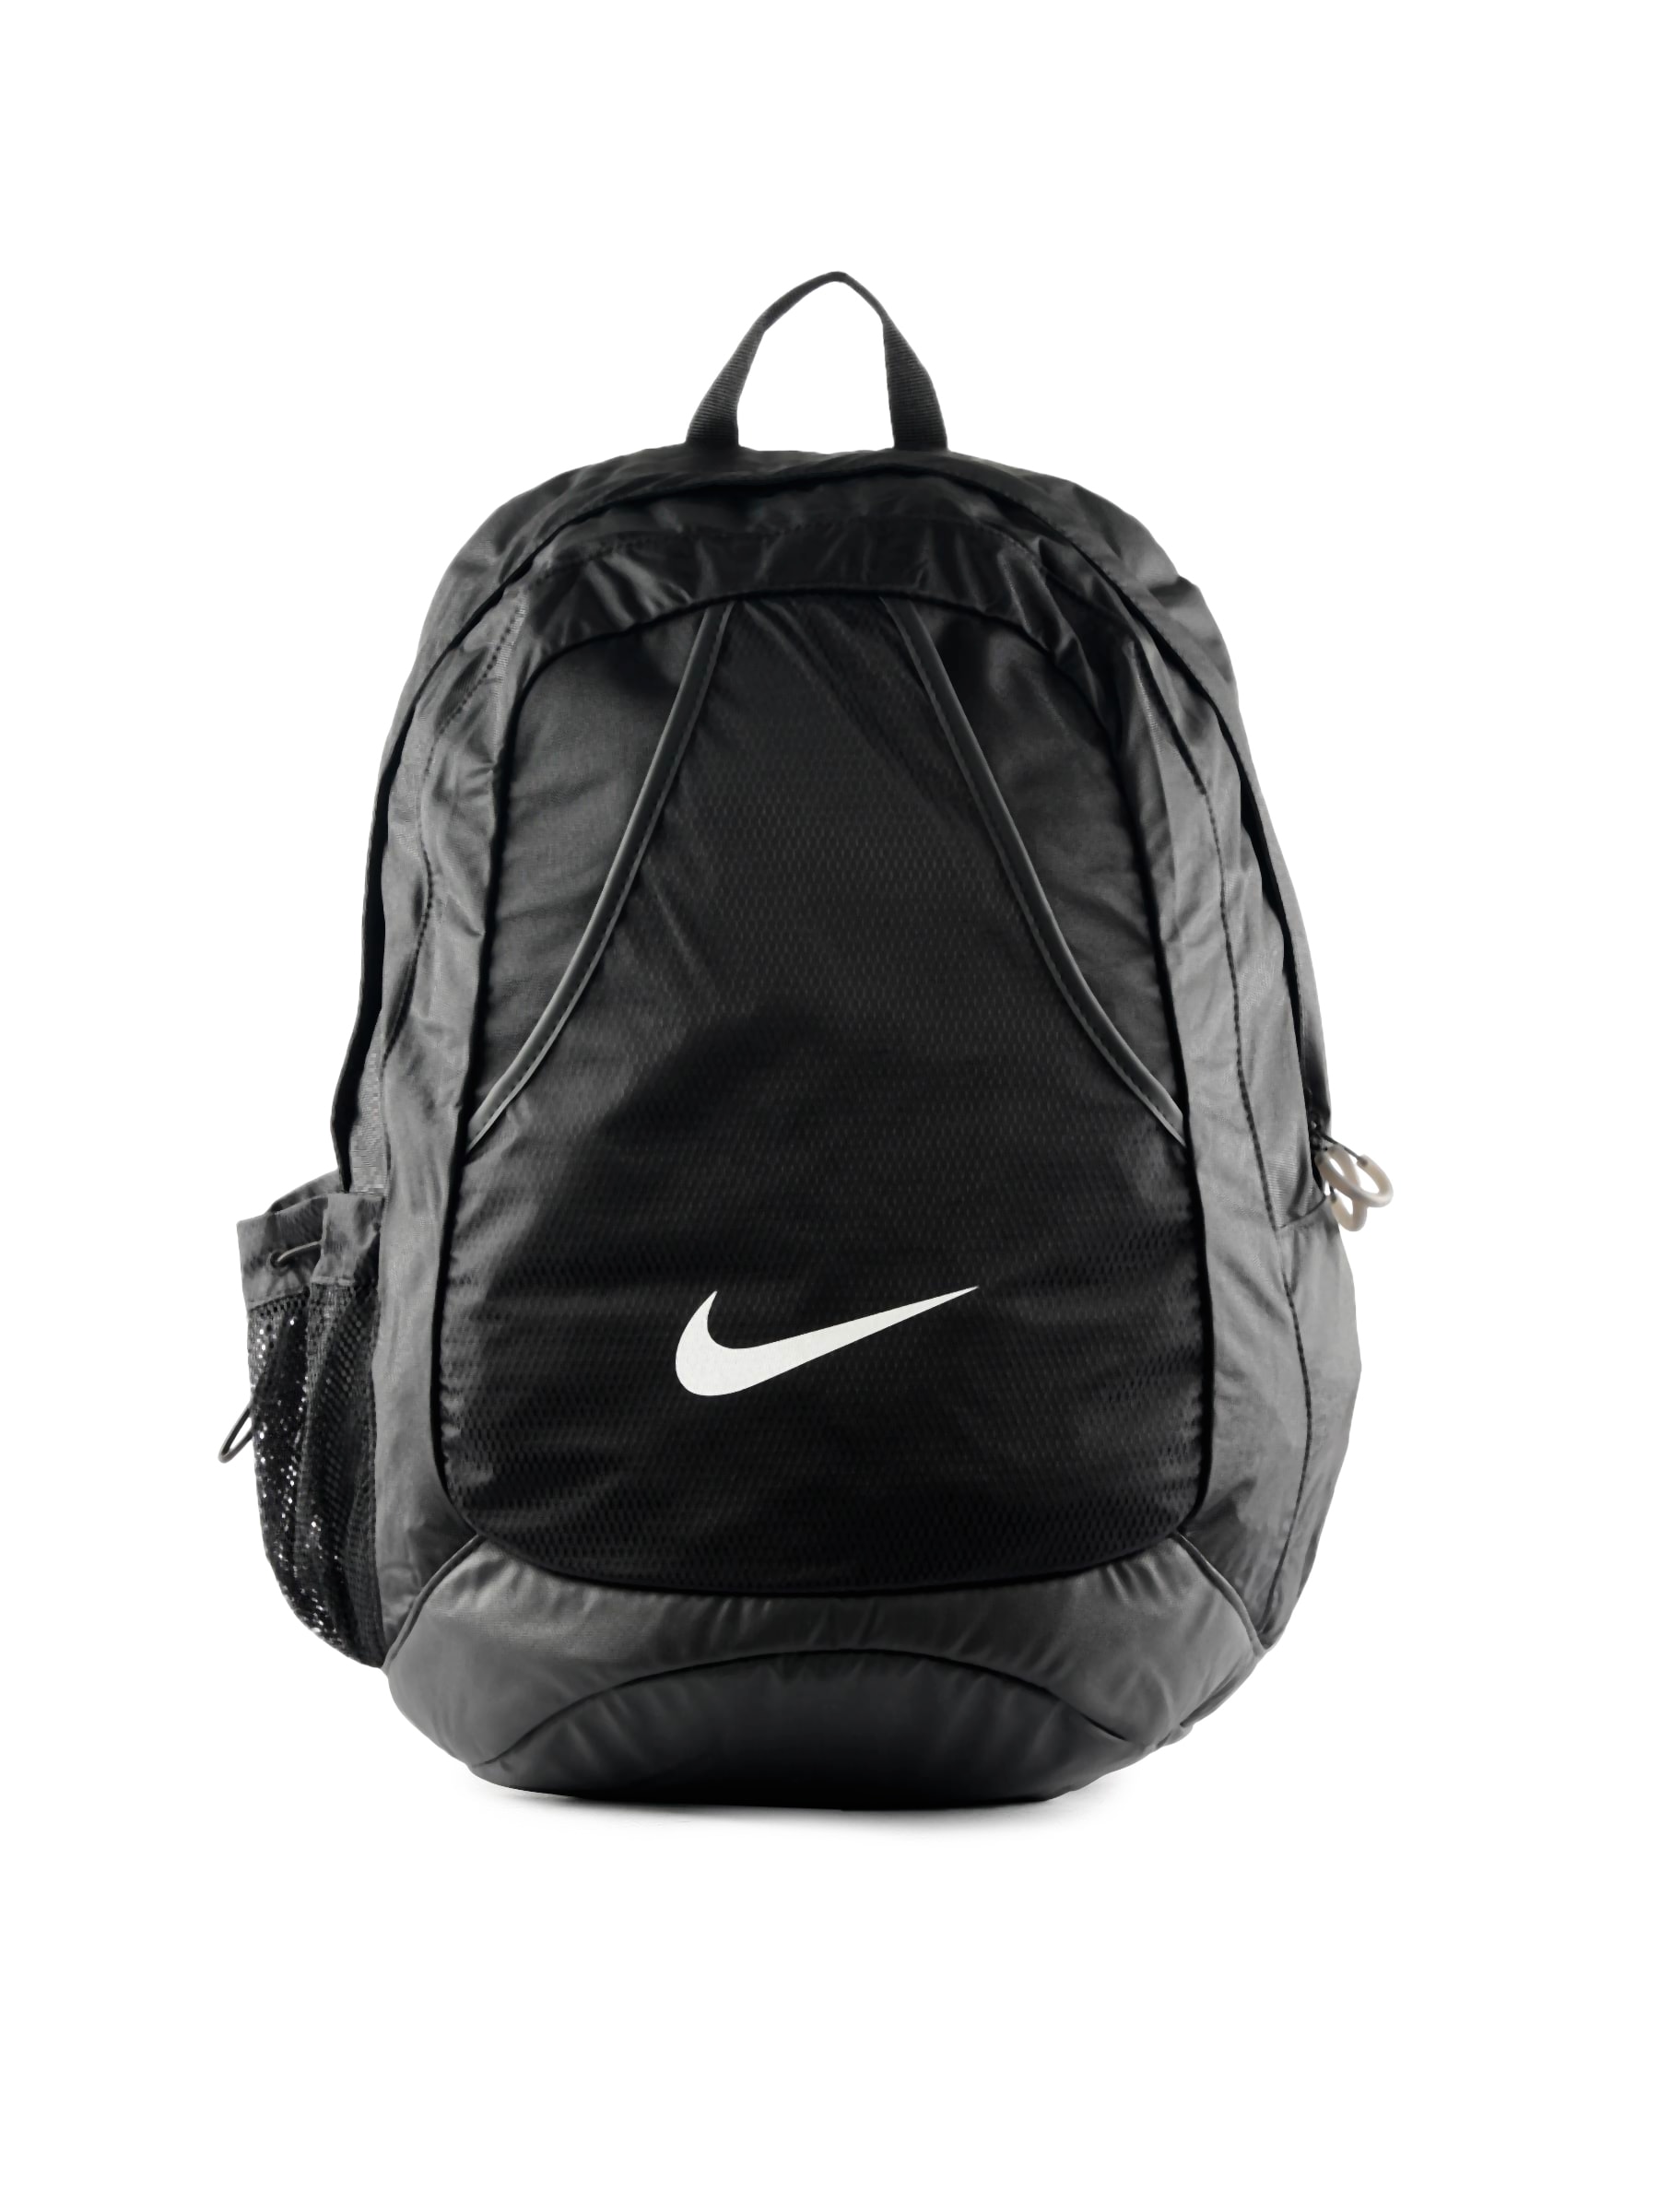 Nike Unisex Casual Black Backpack